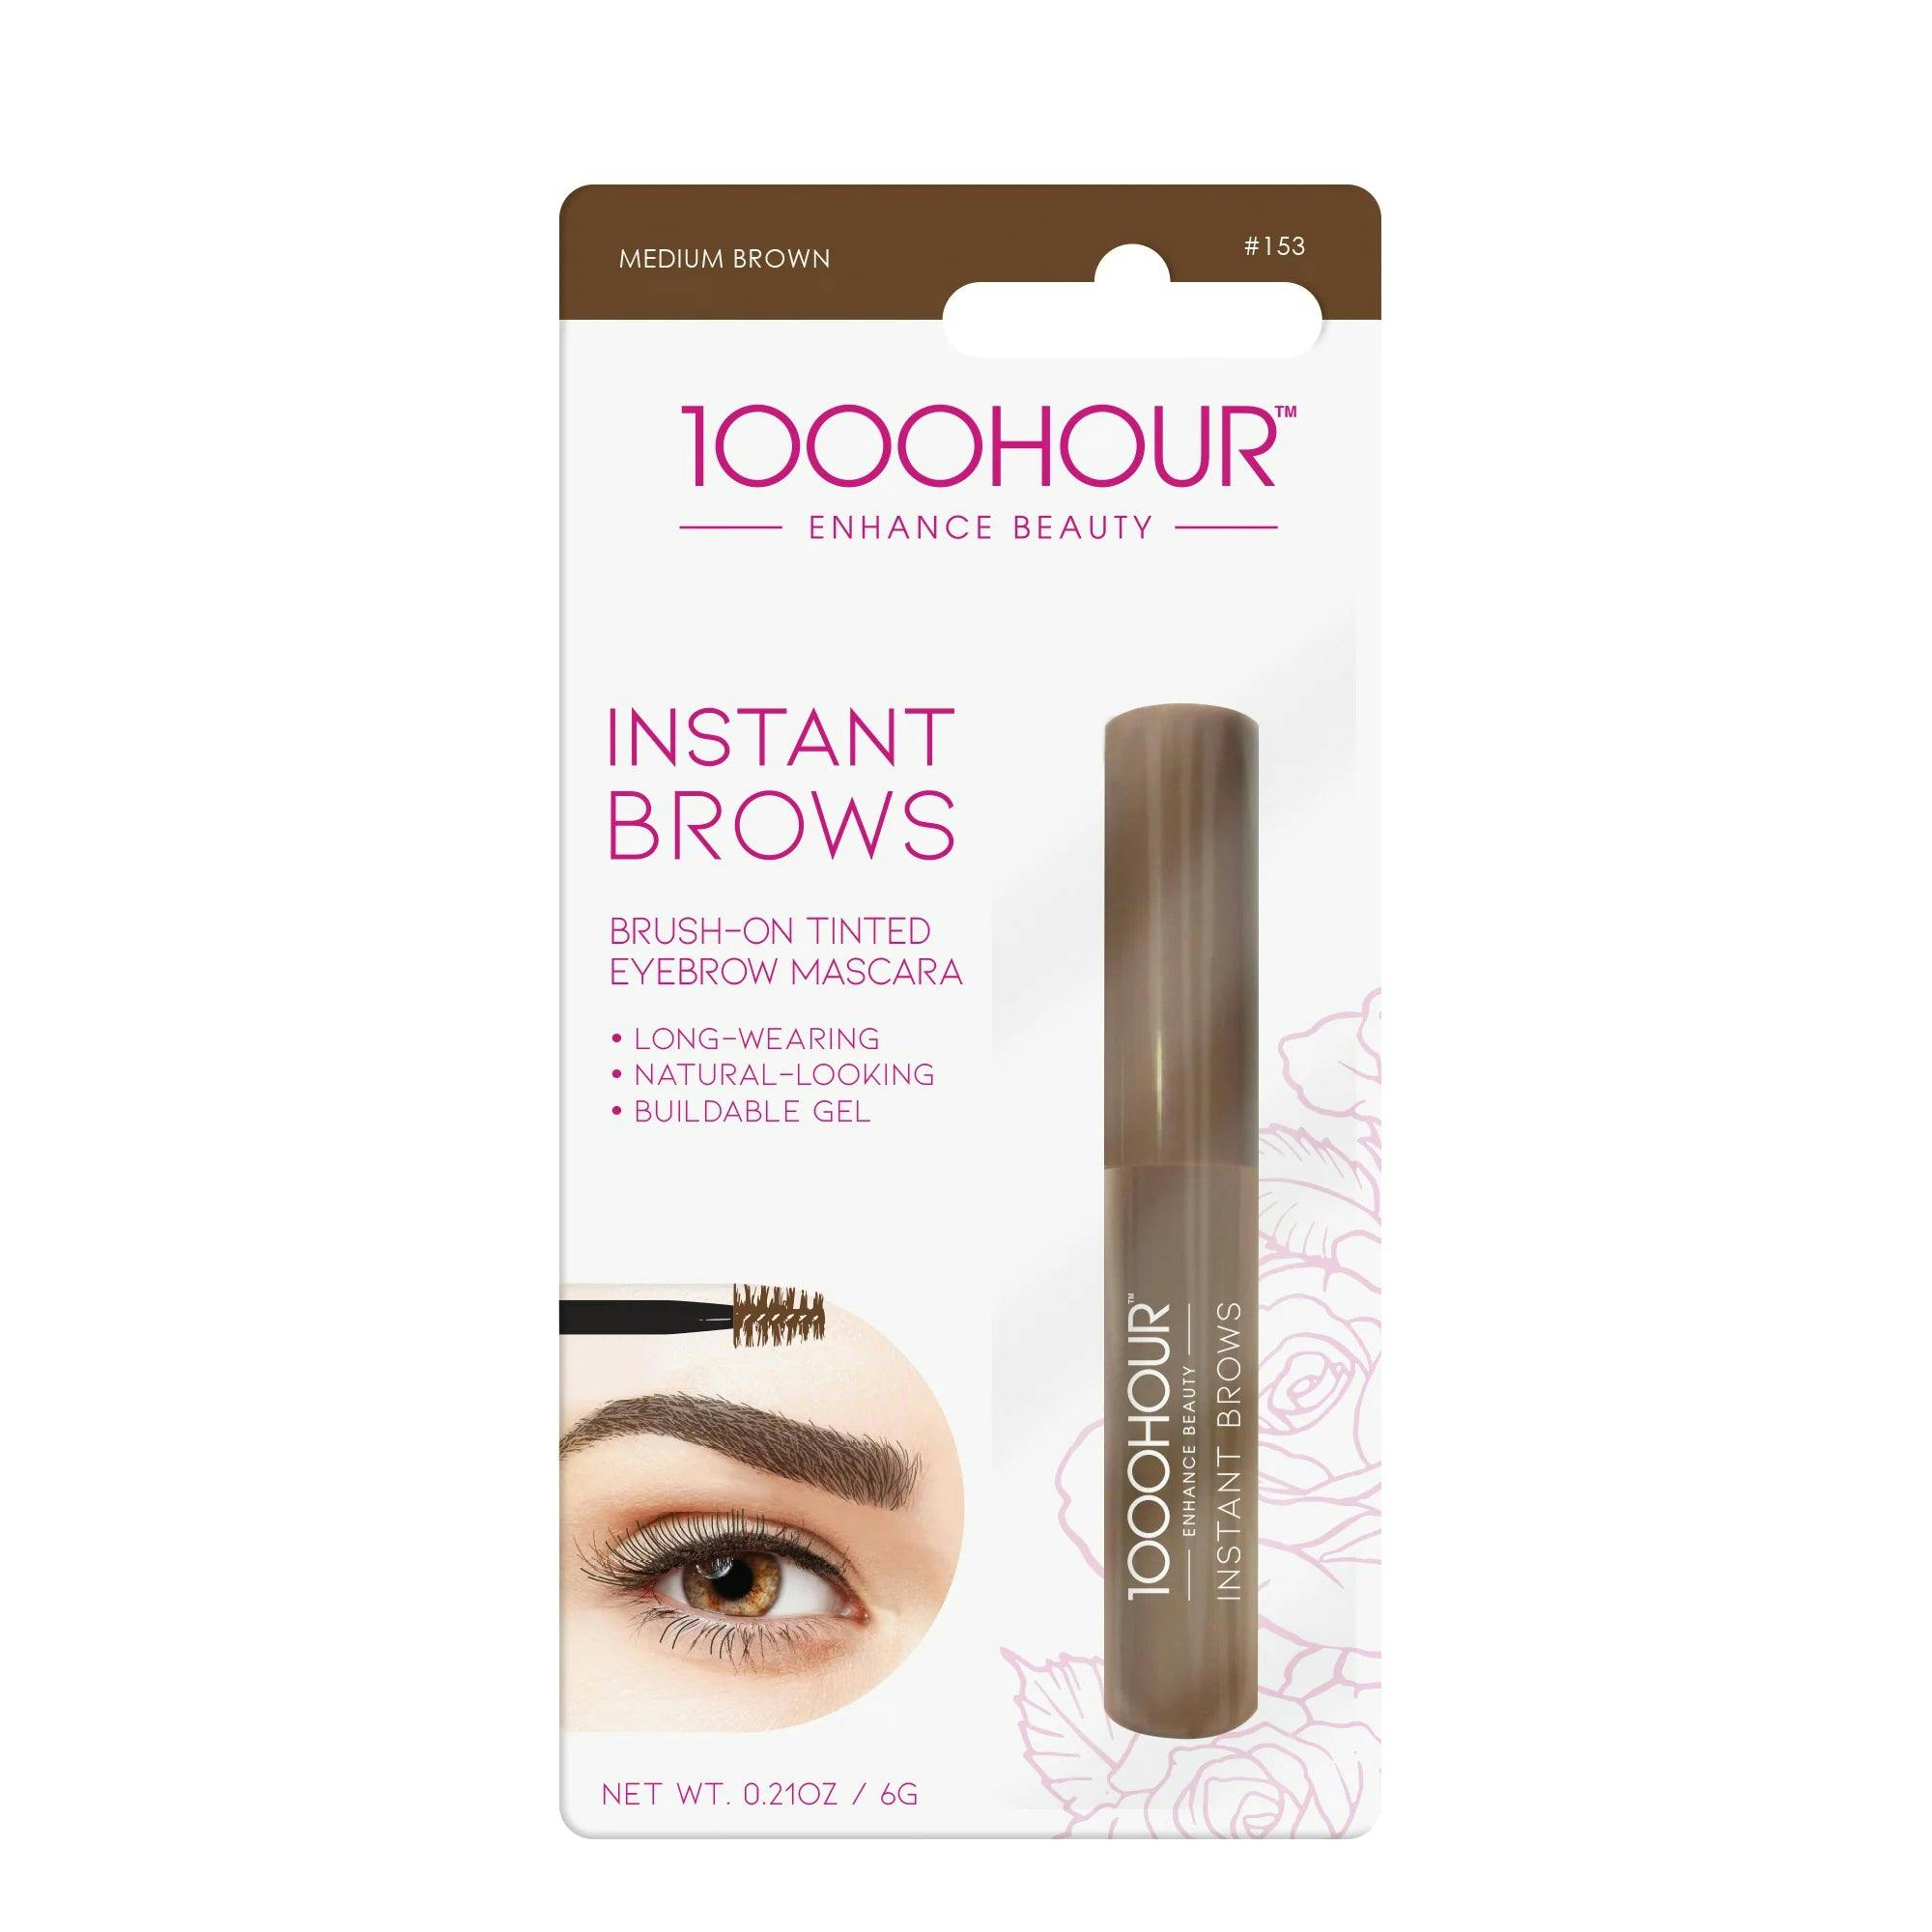 1000 Hour Instant Brows Mascara - Medium Brown